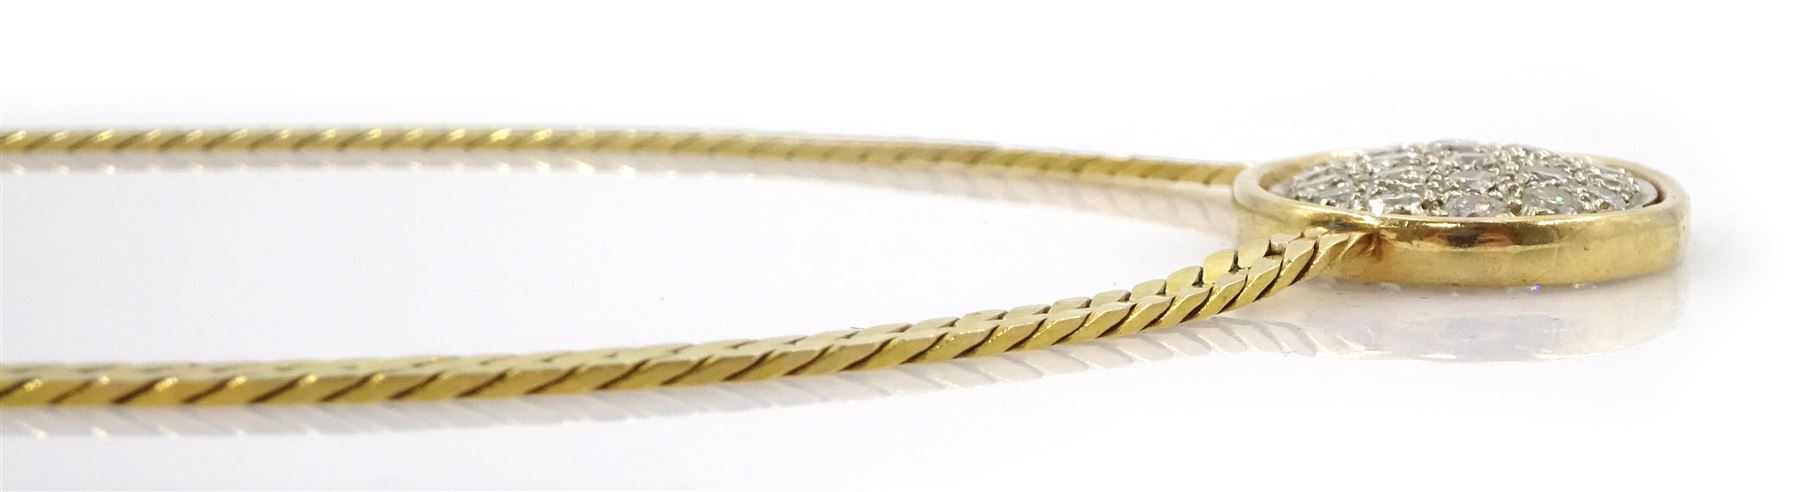 14ct gold pave set round brilliant cut diamond necklace - Image 3 of 3